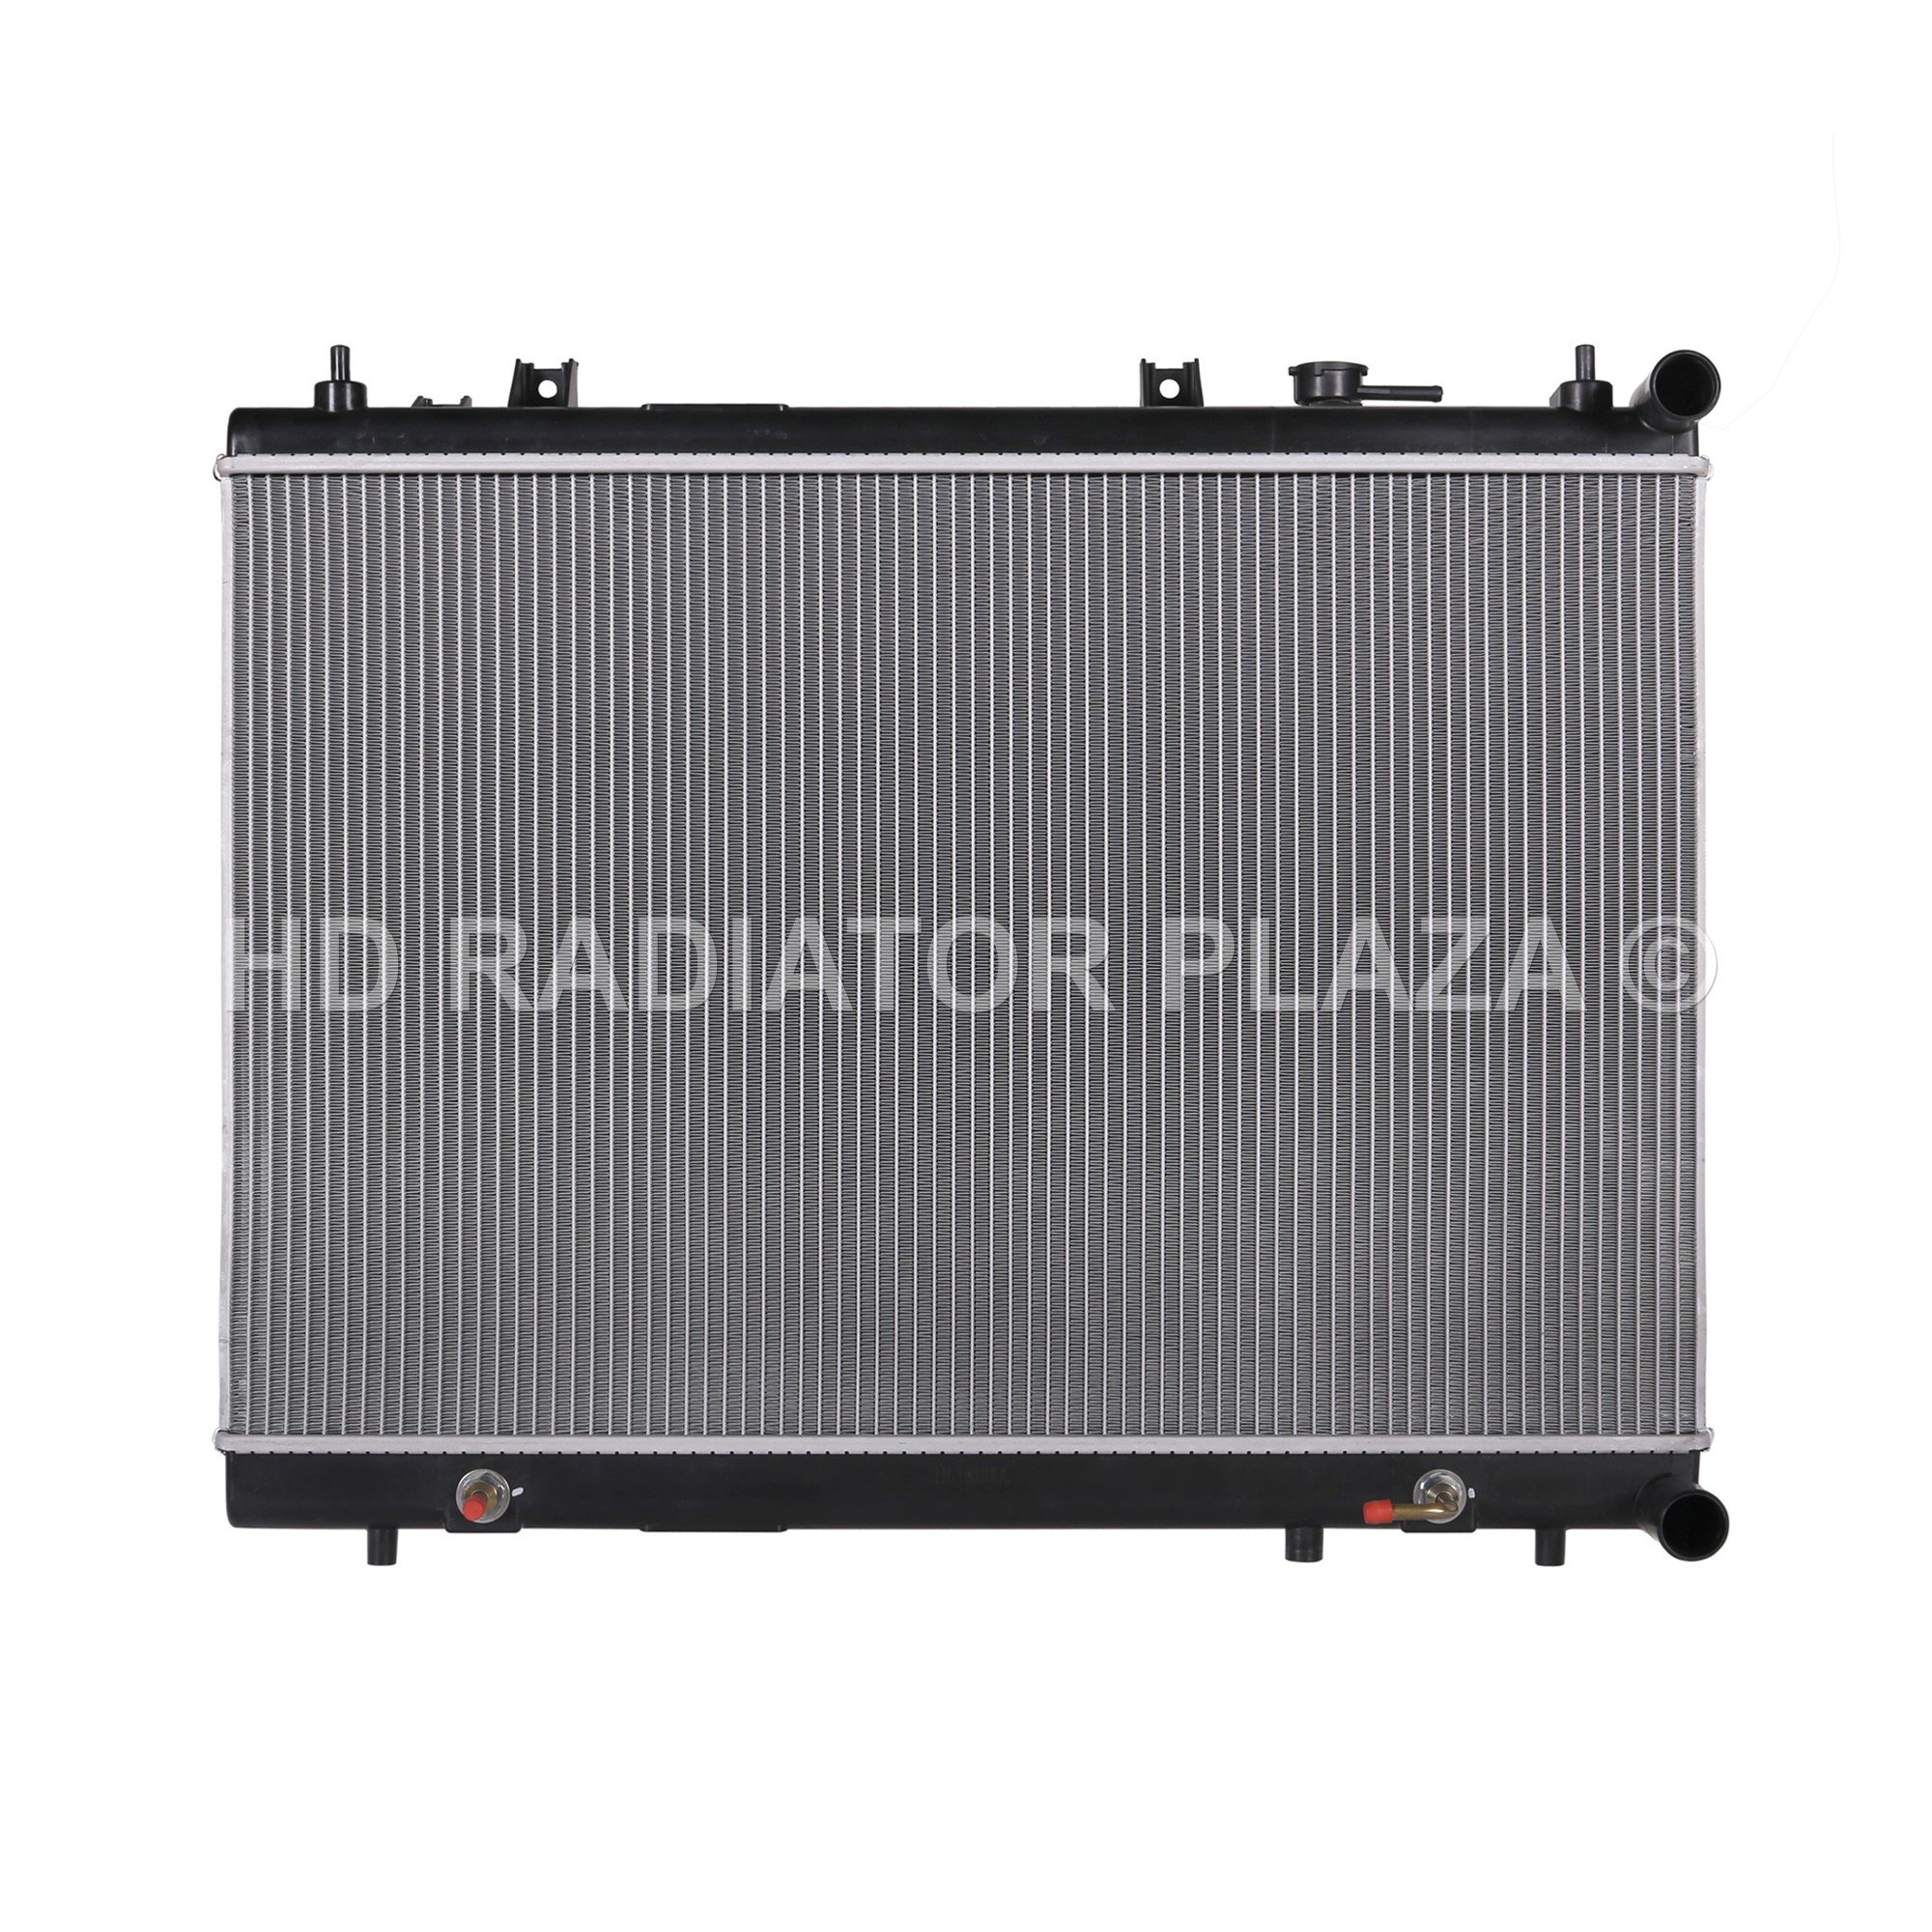 Radiator for 13-19 Infiniti QX60 / JX35, Nissan Pathfinder